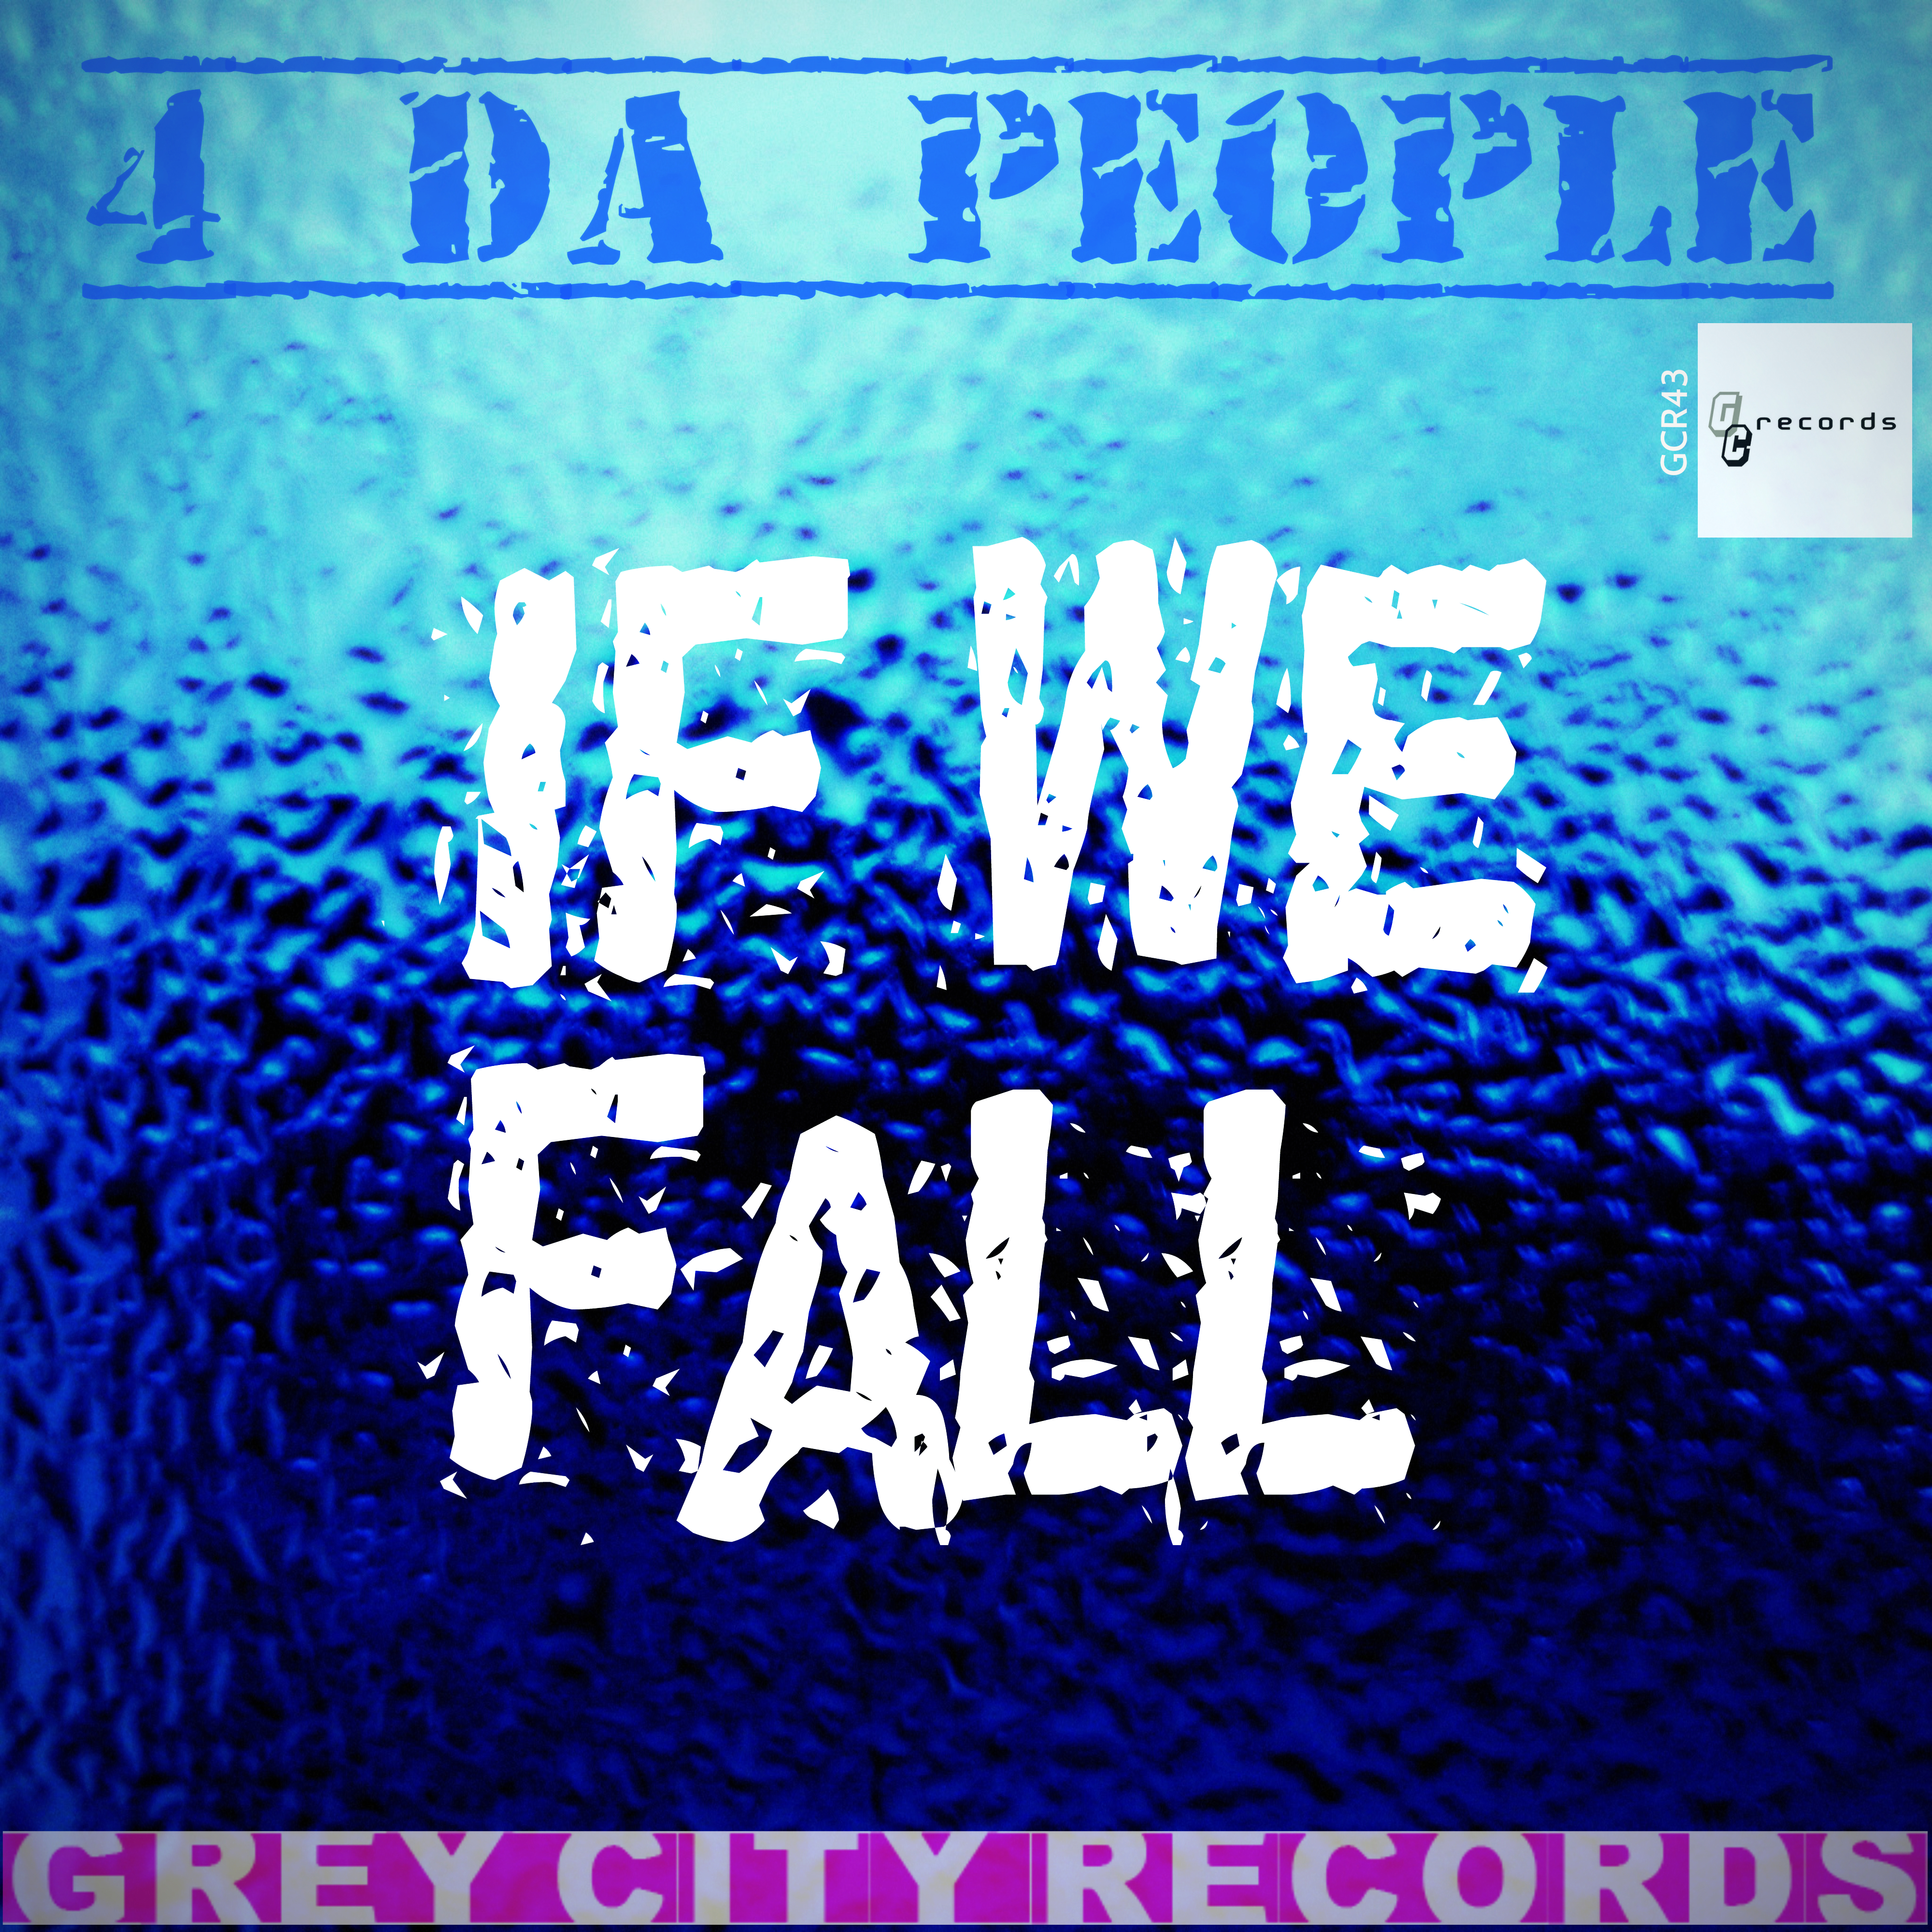 If We Fall